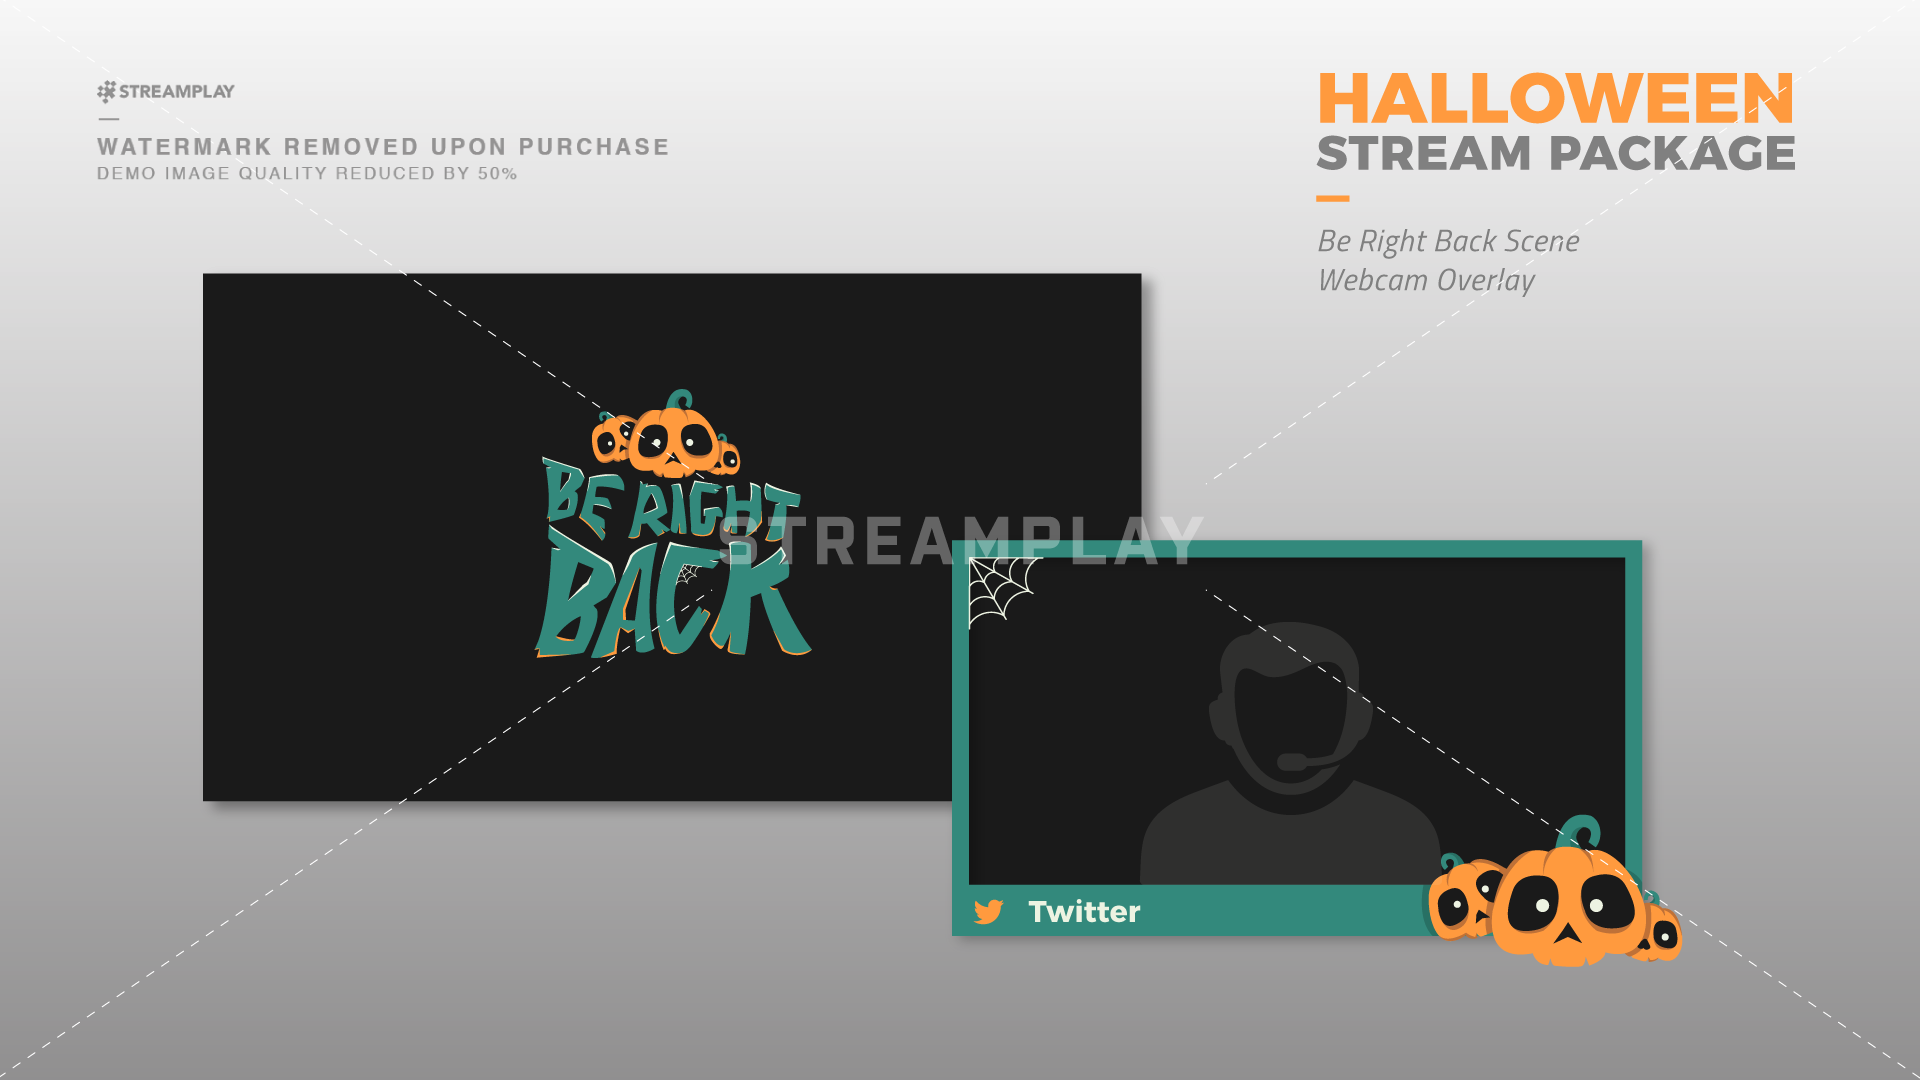 Twitch Halloween webcam overlay package